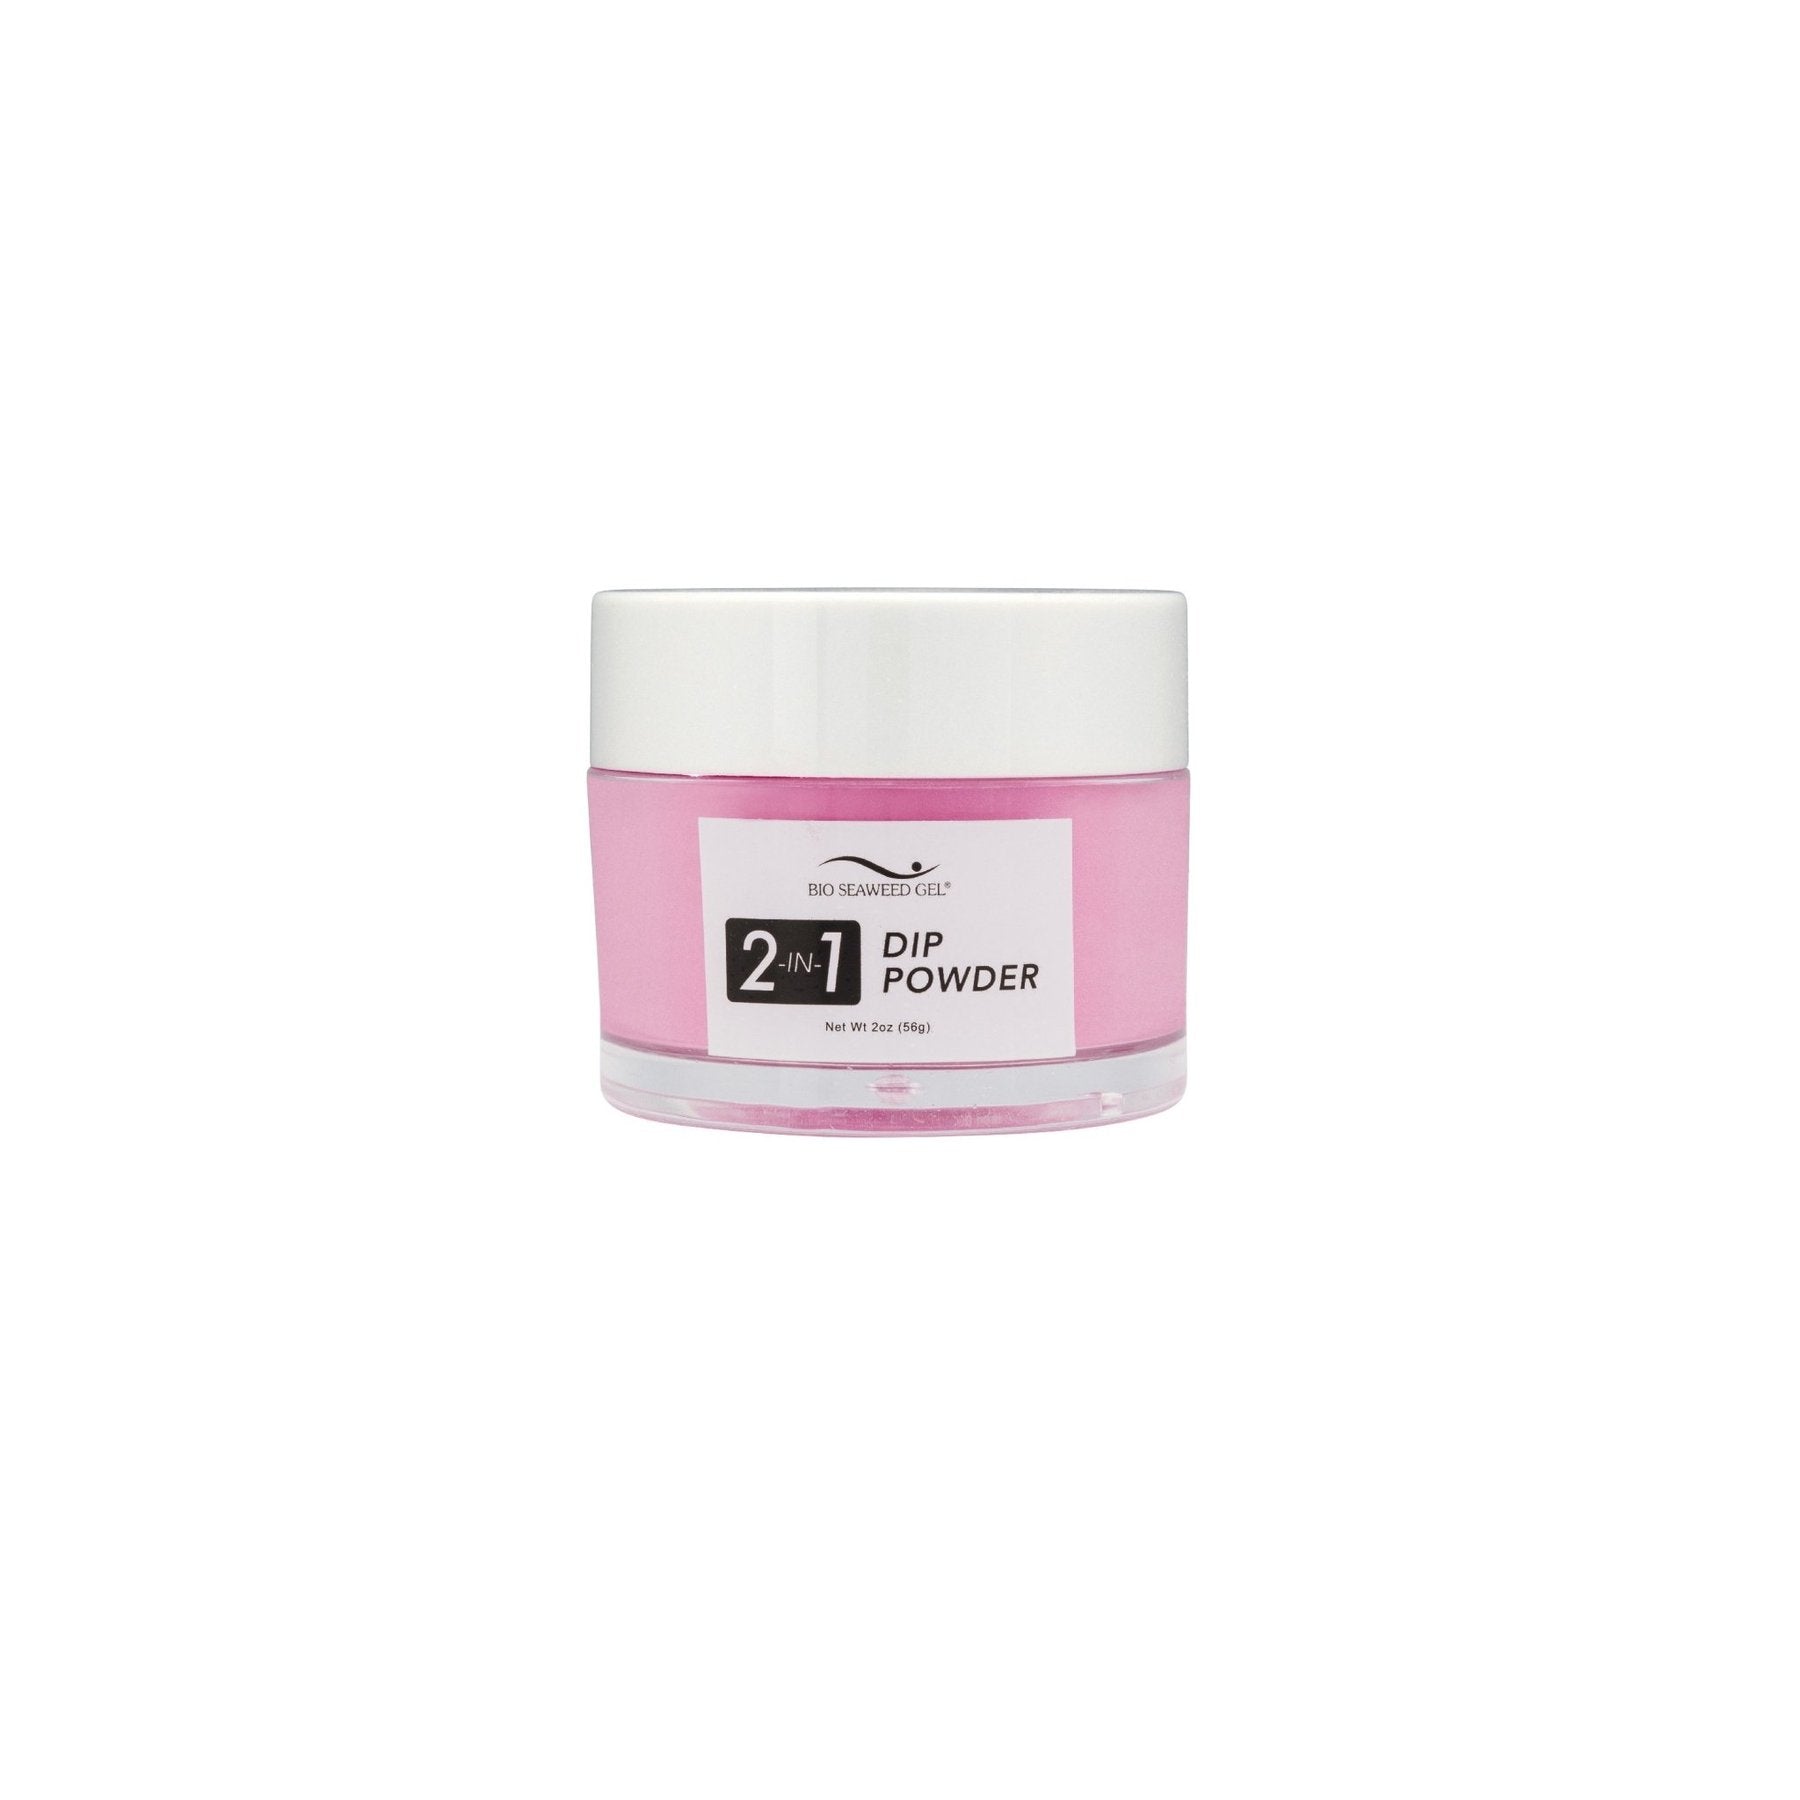 90 HIBISCUS | Bio Seaweed Gel® Dip Powder System - CM Nails & Beauty Supply